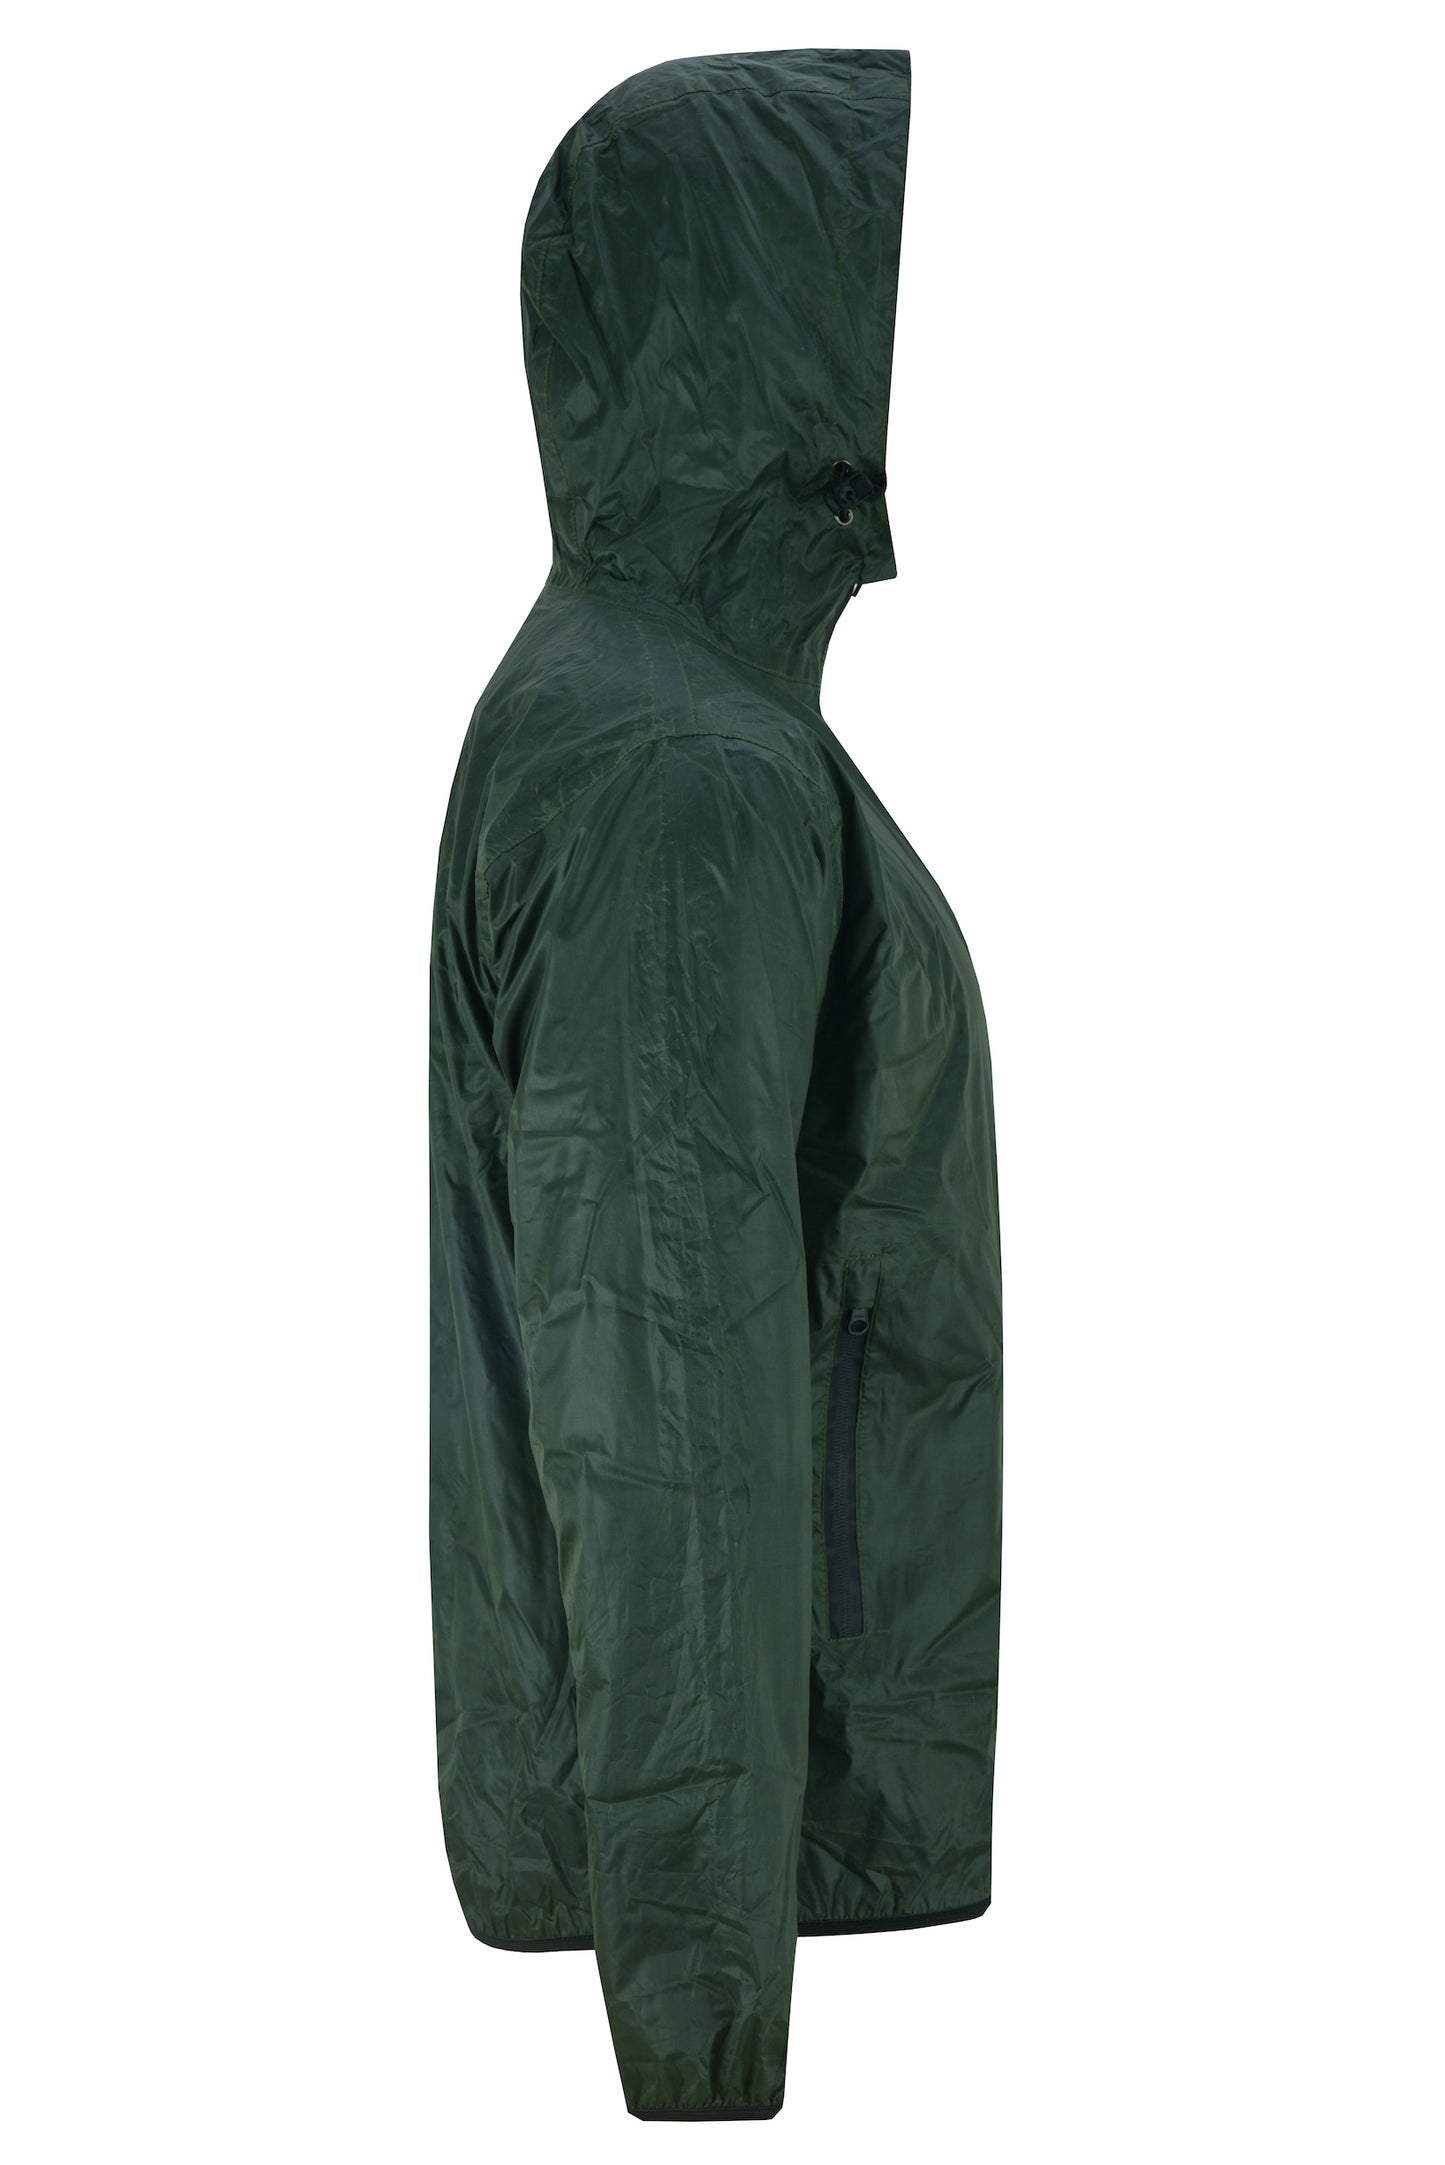 Lightweight green KONUSTEX AMODO hunting jacket, waterproof and rainproof 